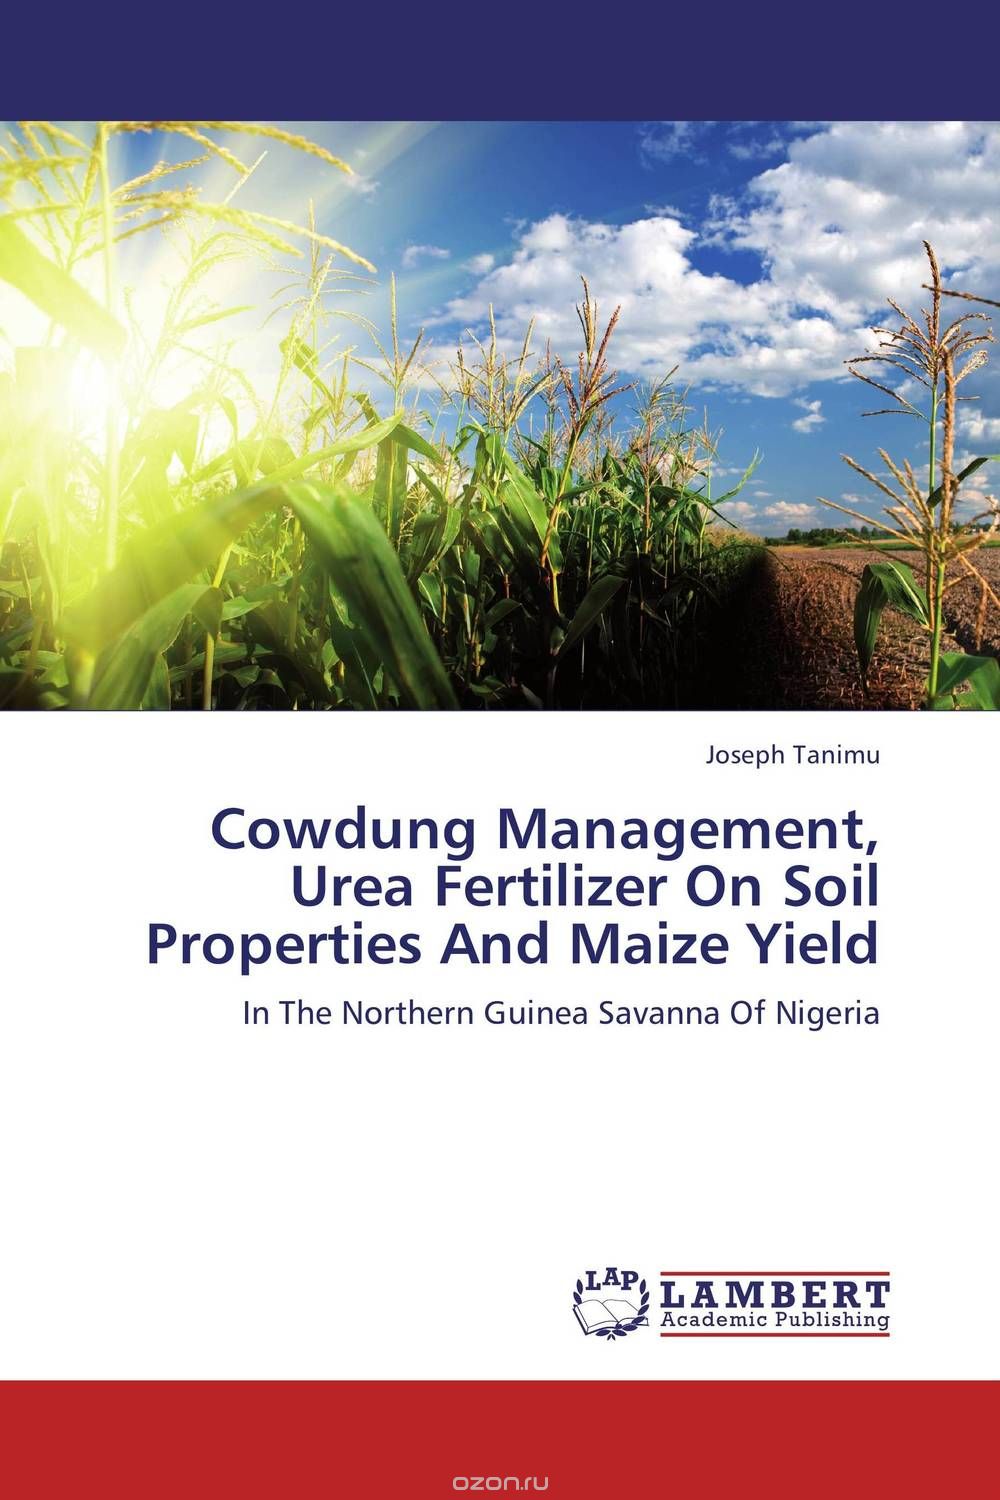 Скачать книгу "Cowdung Management, Urea Fertilizer On Soil Properties And Maize Yield"